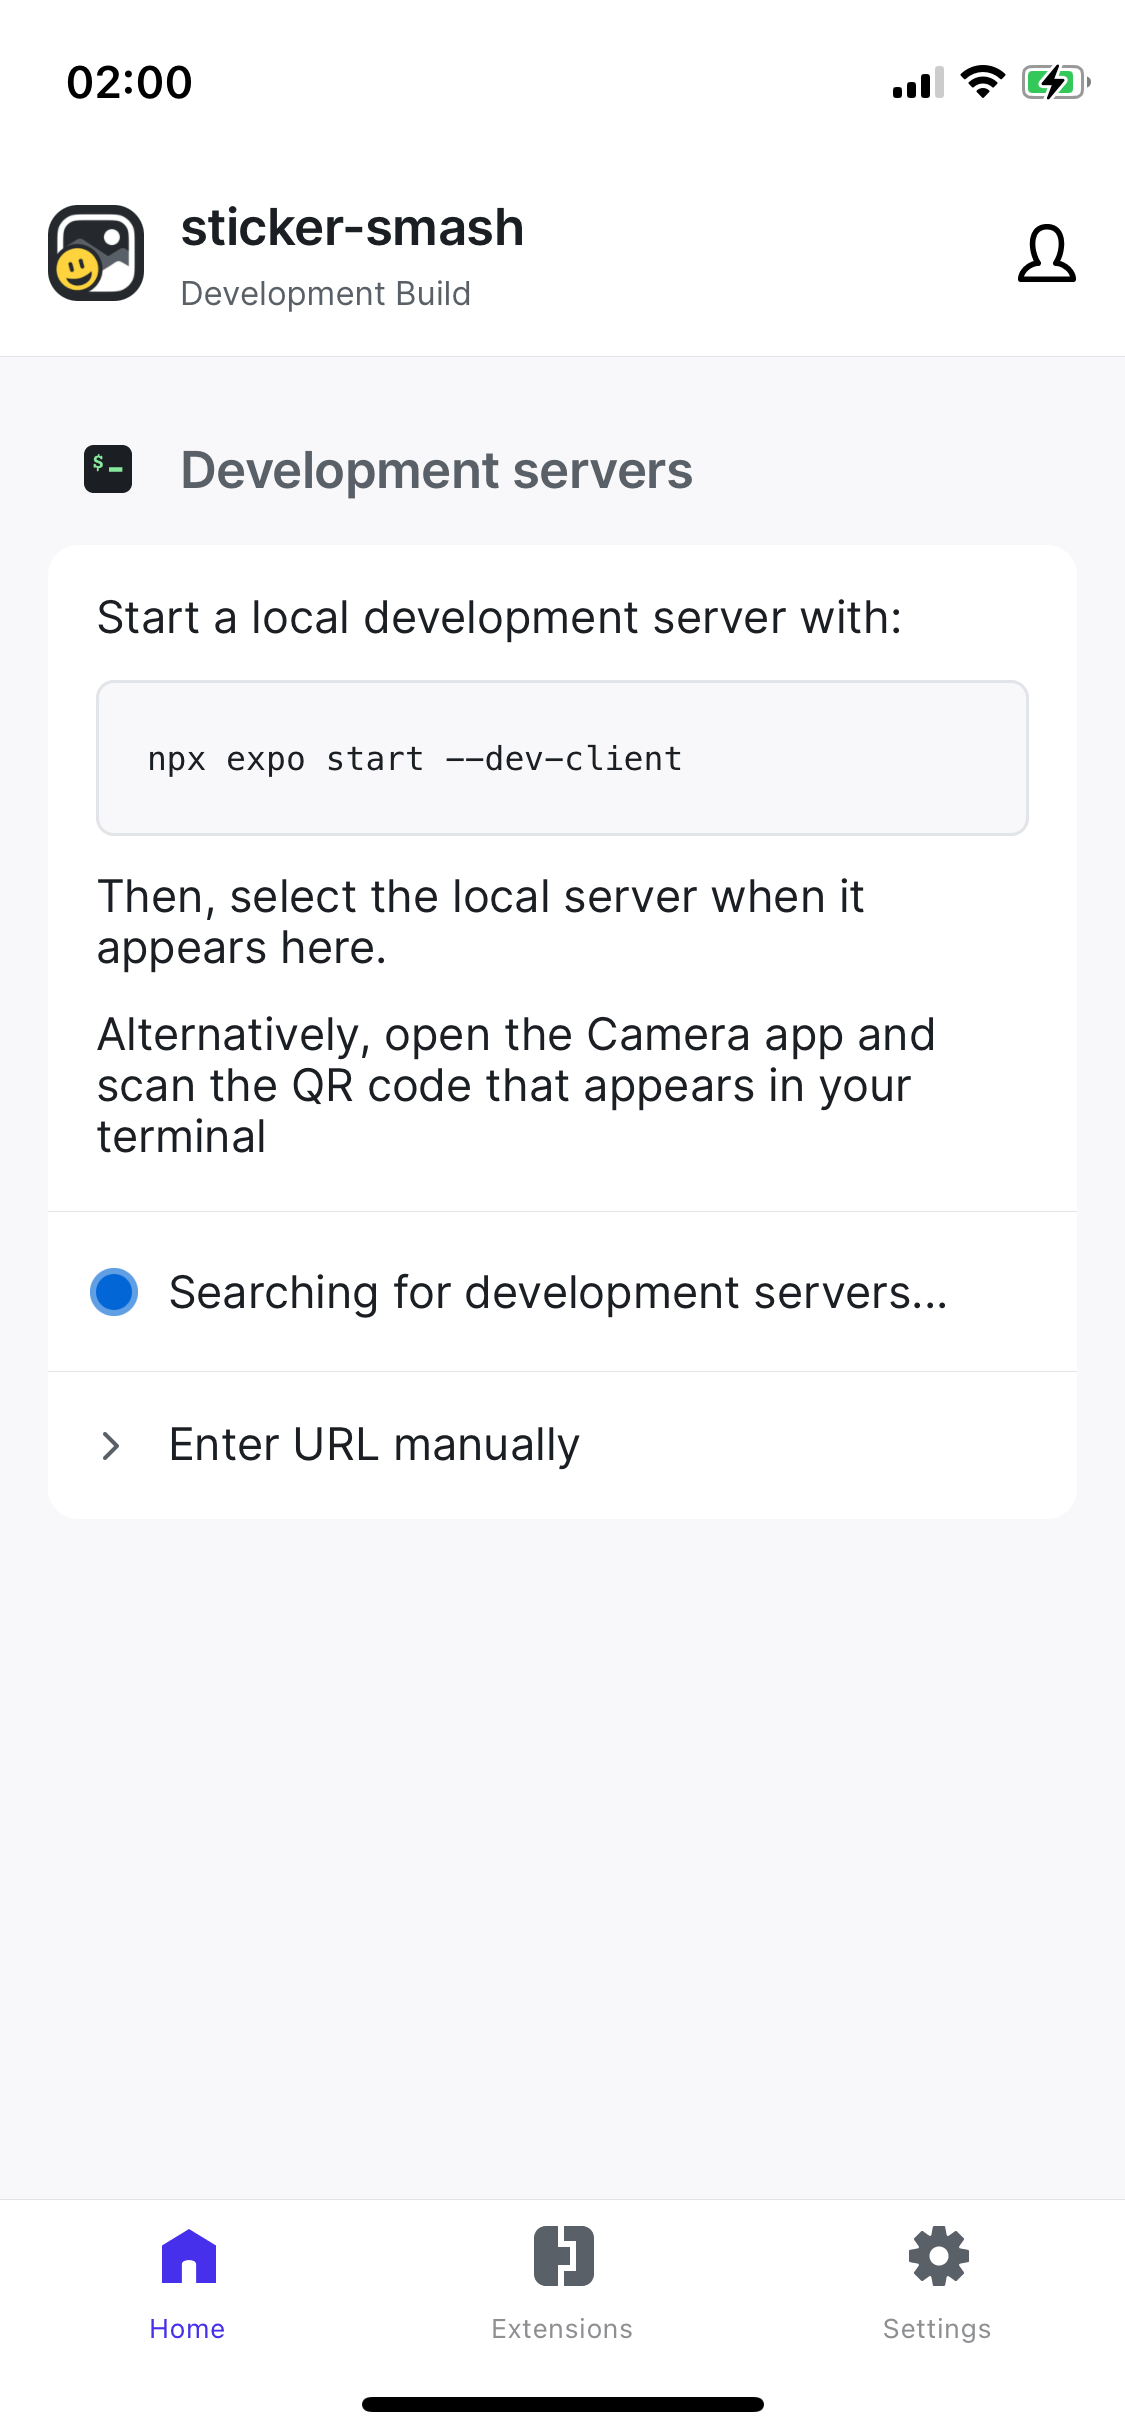 Development build's launcher UI on iOS device